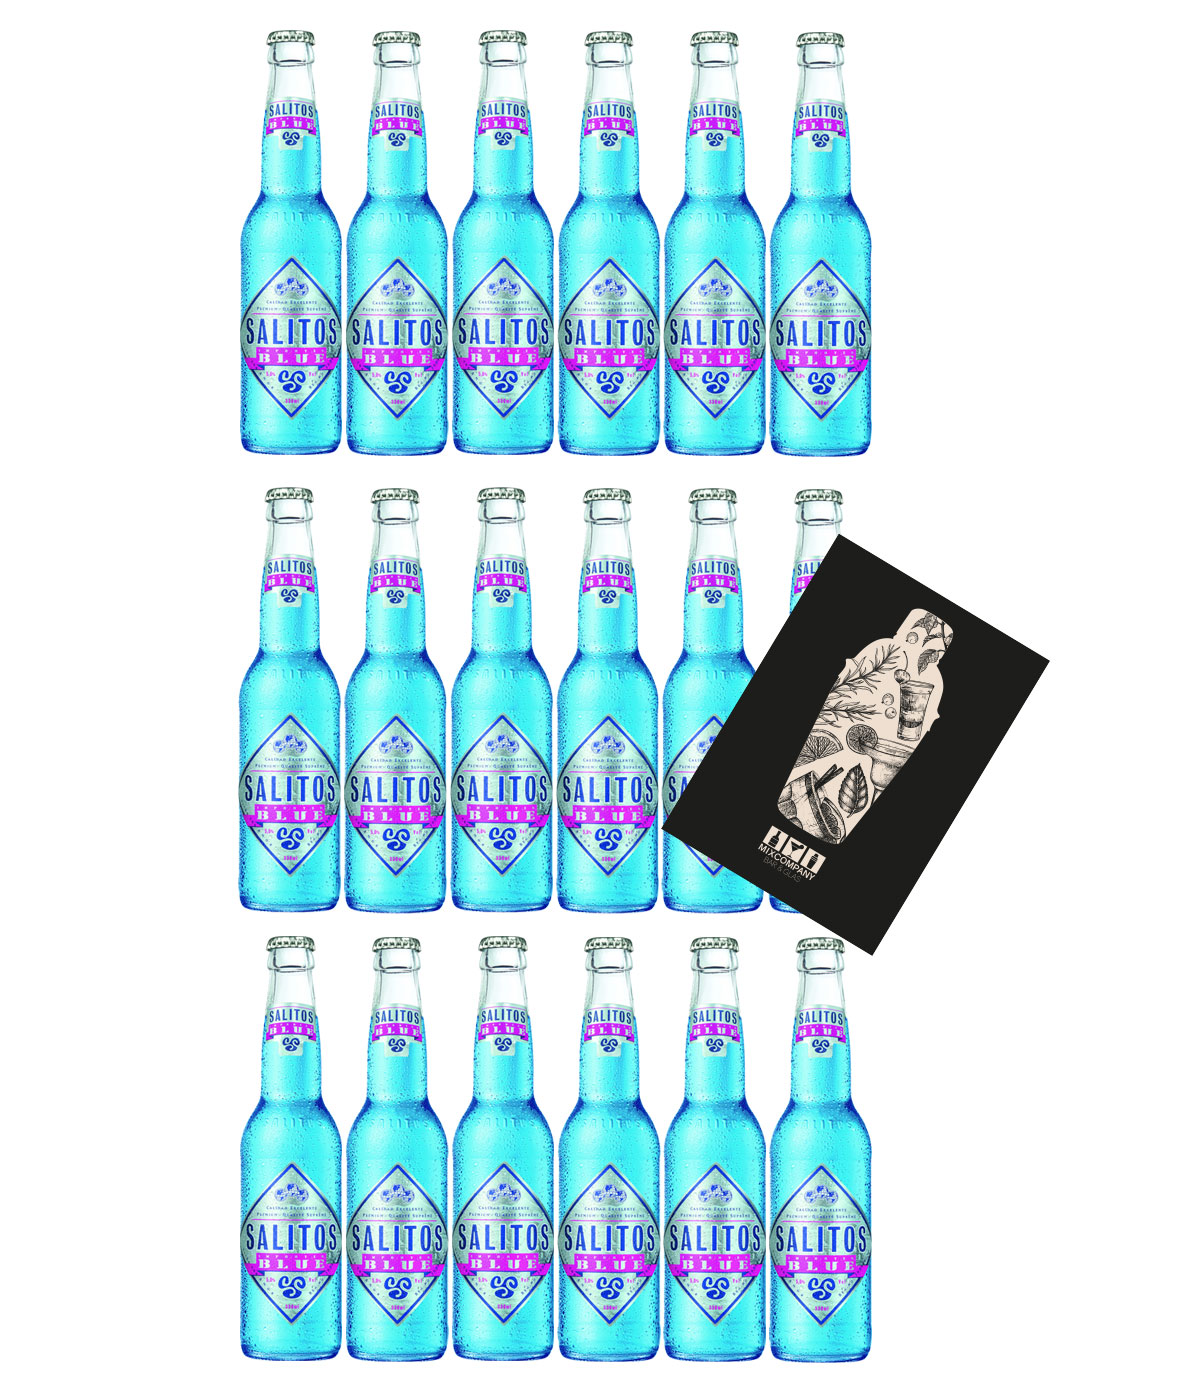 Salitos 18er Set Bier Salitos Blue Beer 18x 0,33L (5% Vol) inkl. Pfand MEHRWEG mit Mixcompany Grußkarte- [Enthält Sulfite]